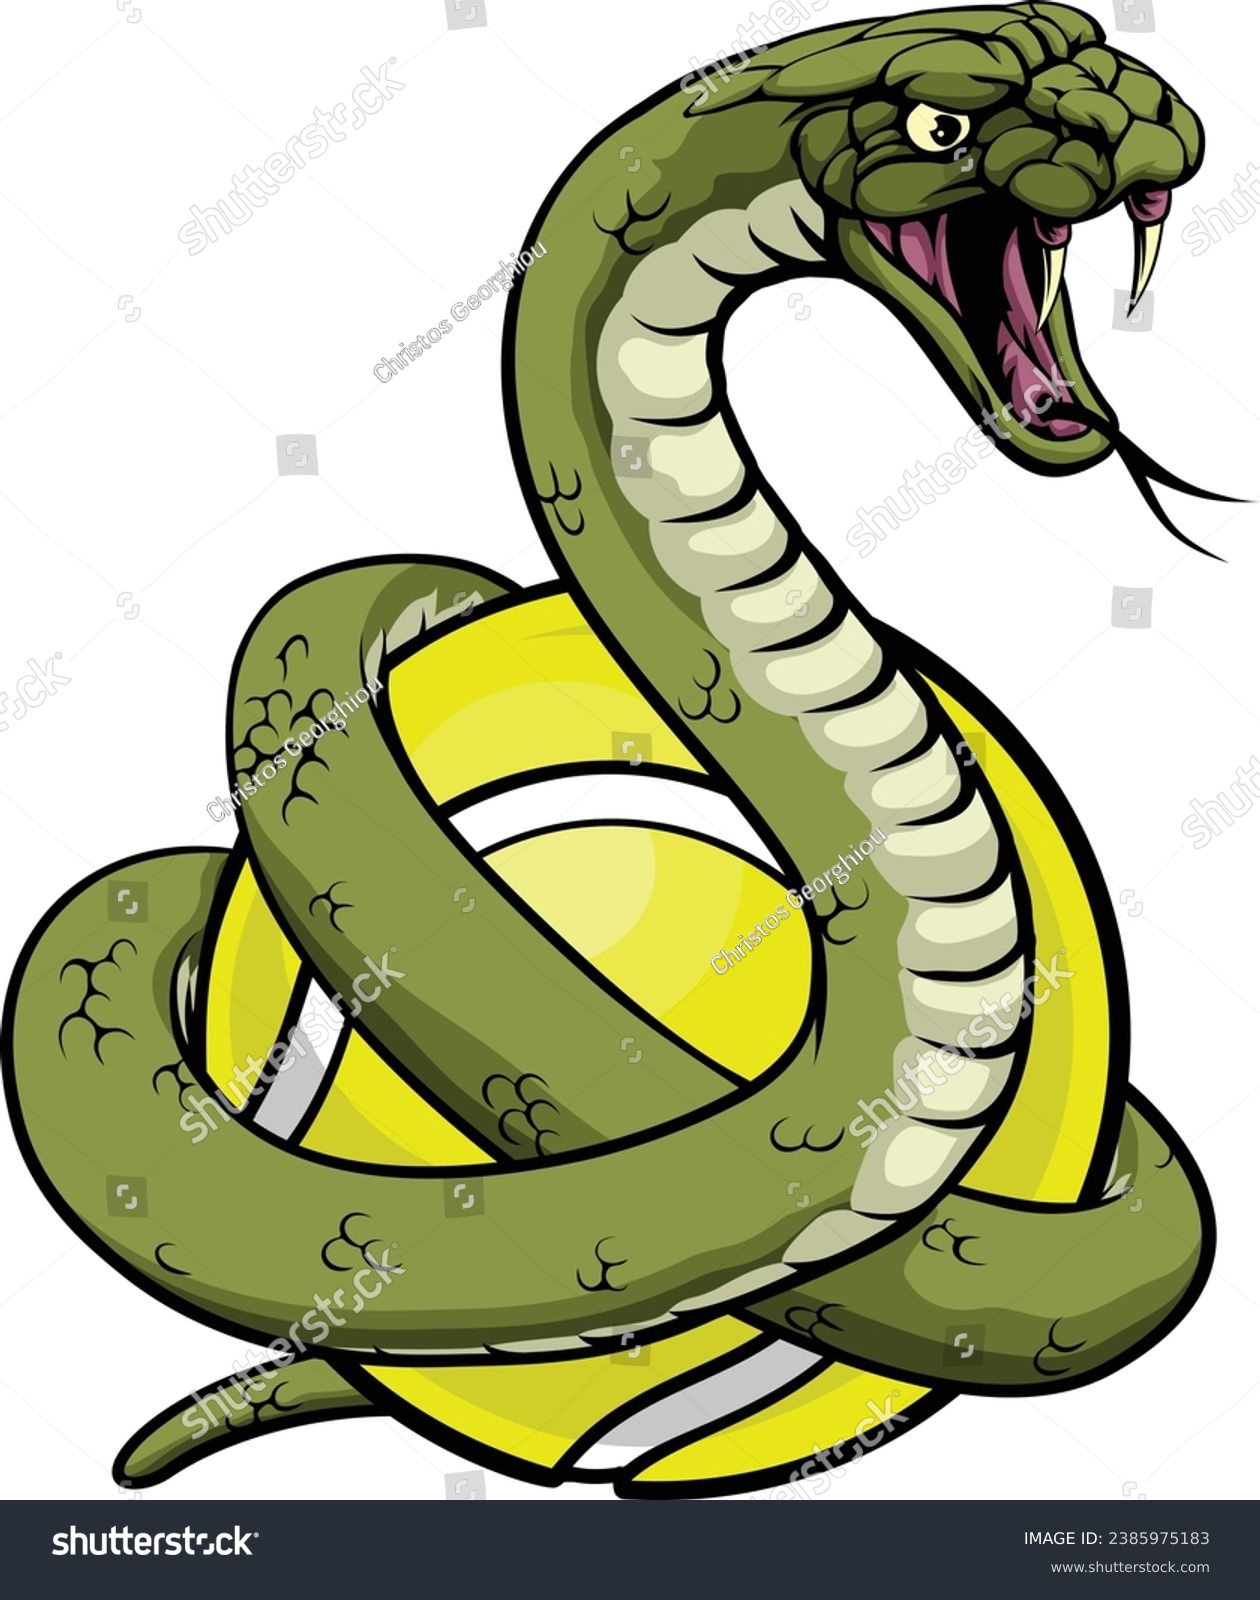 SVG of A snake with a tennis ball sports team animal cartoon mascot svg